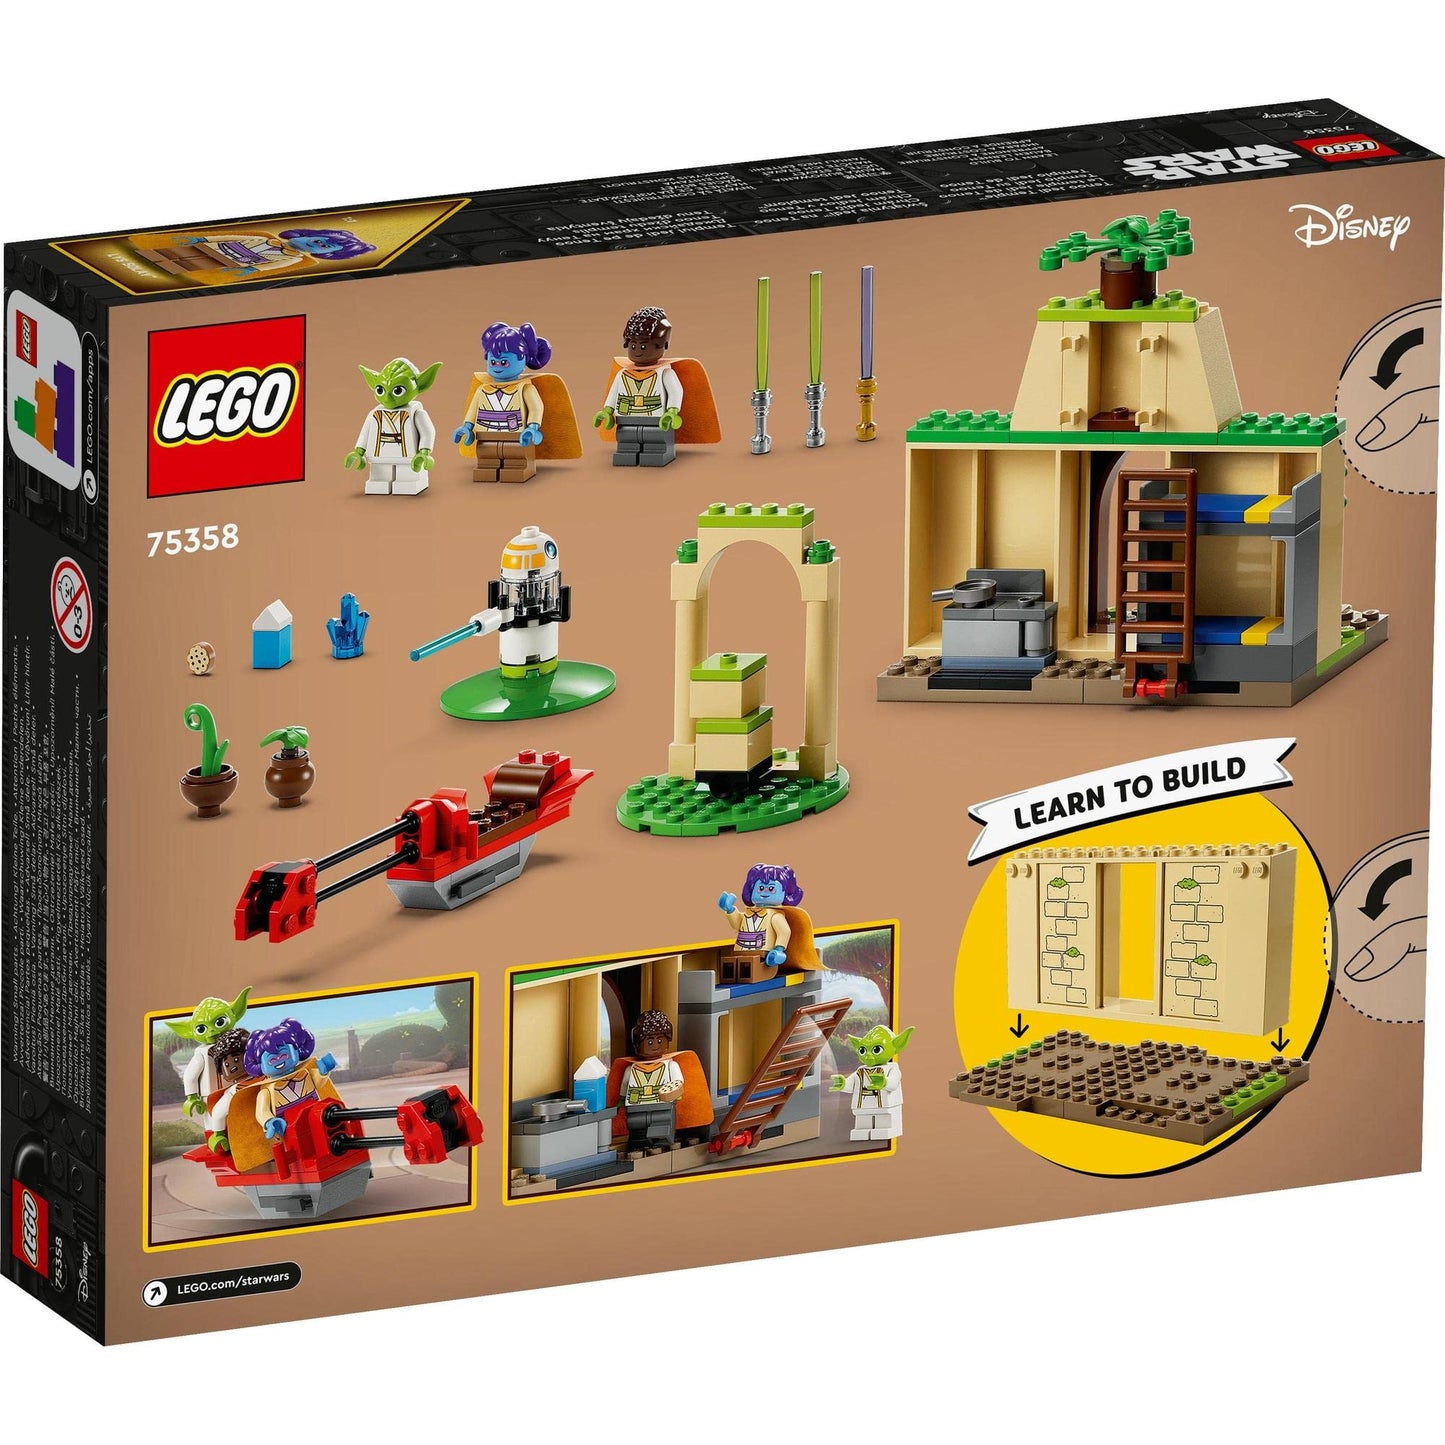 LEGO® Star Wars™ Tenoo Jedi Temple™ 75358